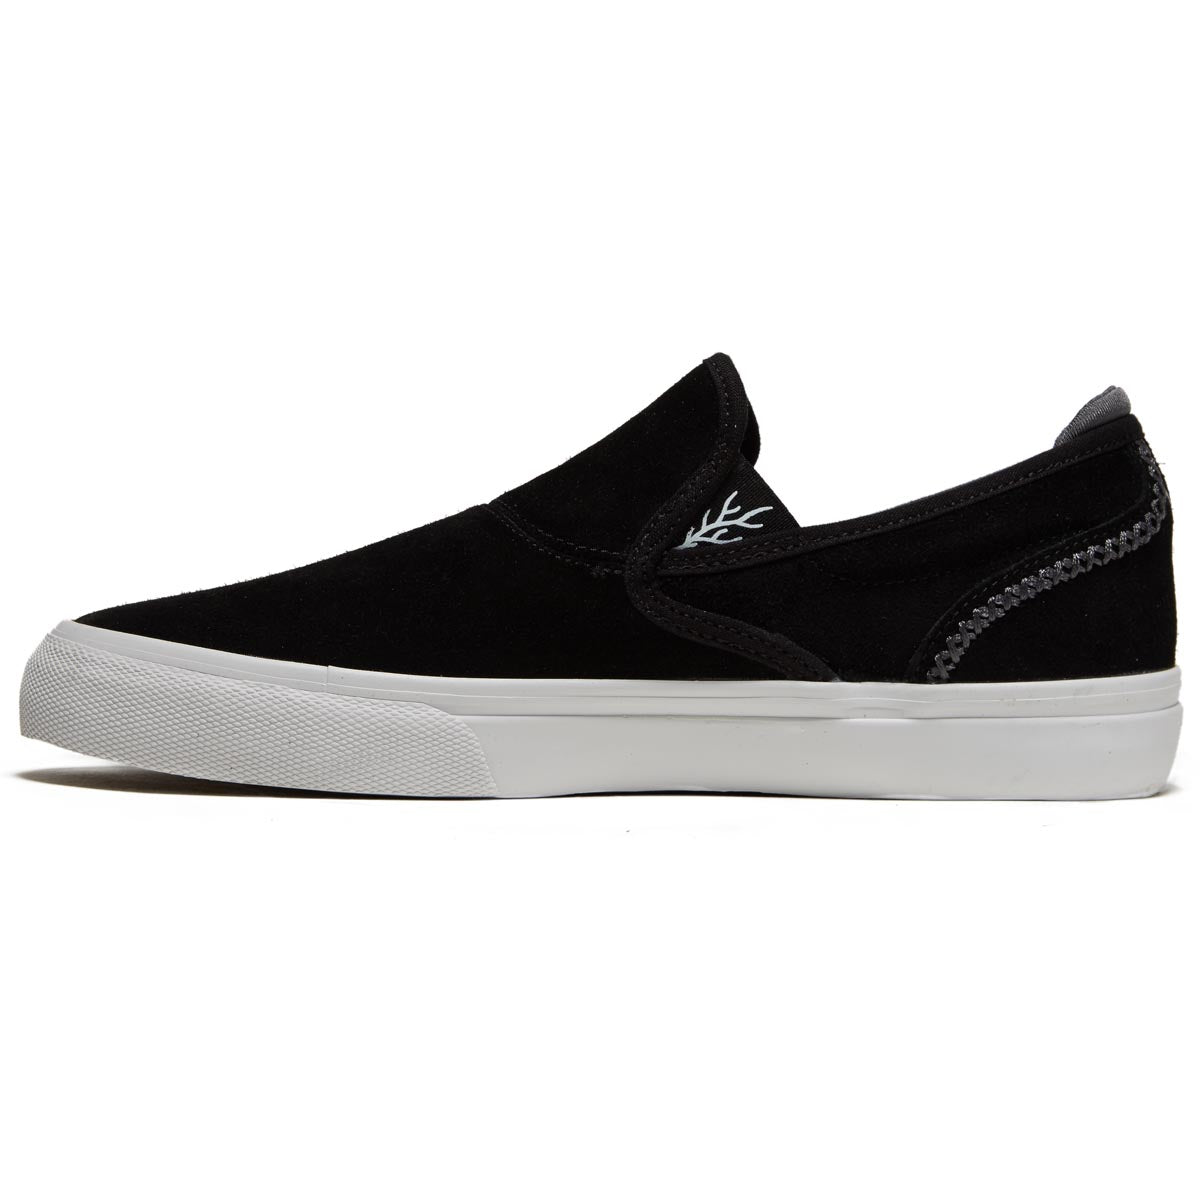 Emerica Wino G6 Slip-on Shoes - Black/White/White image 2